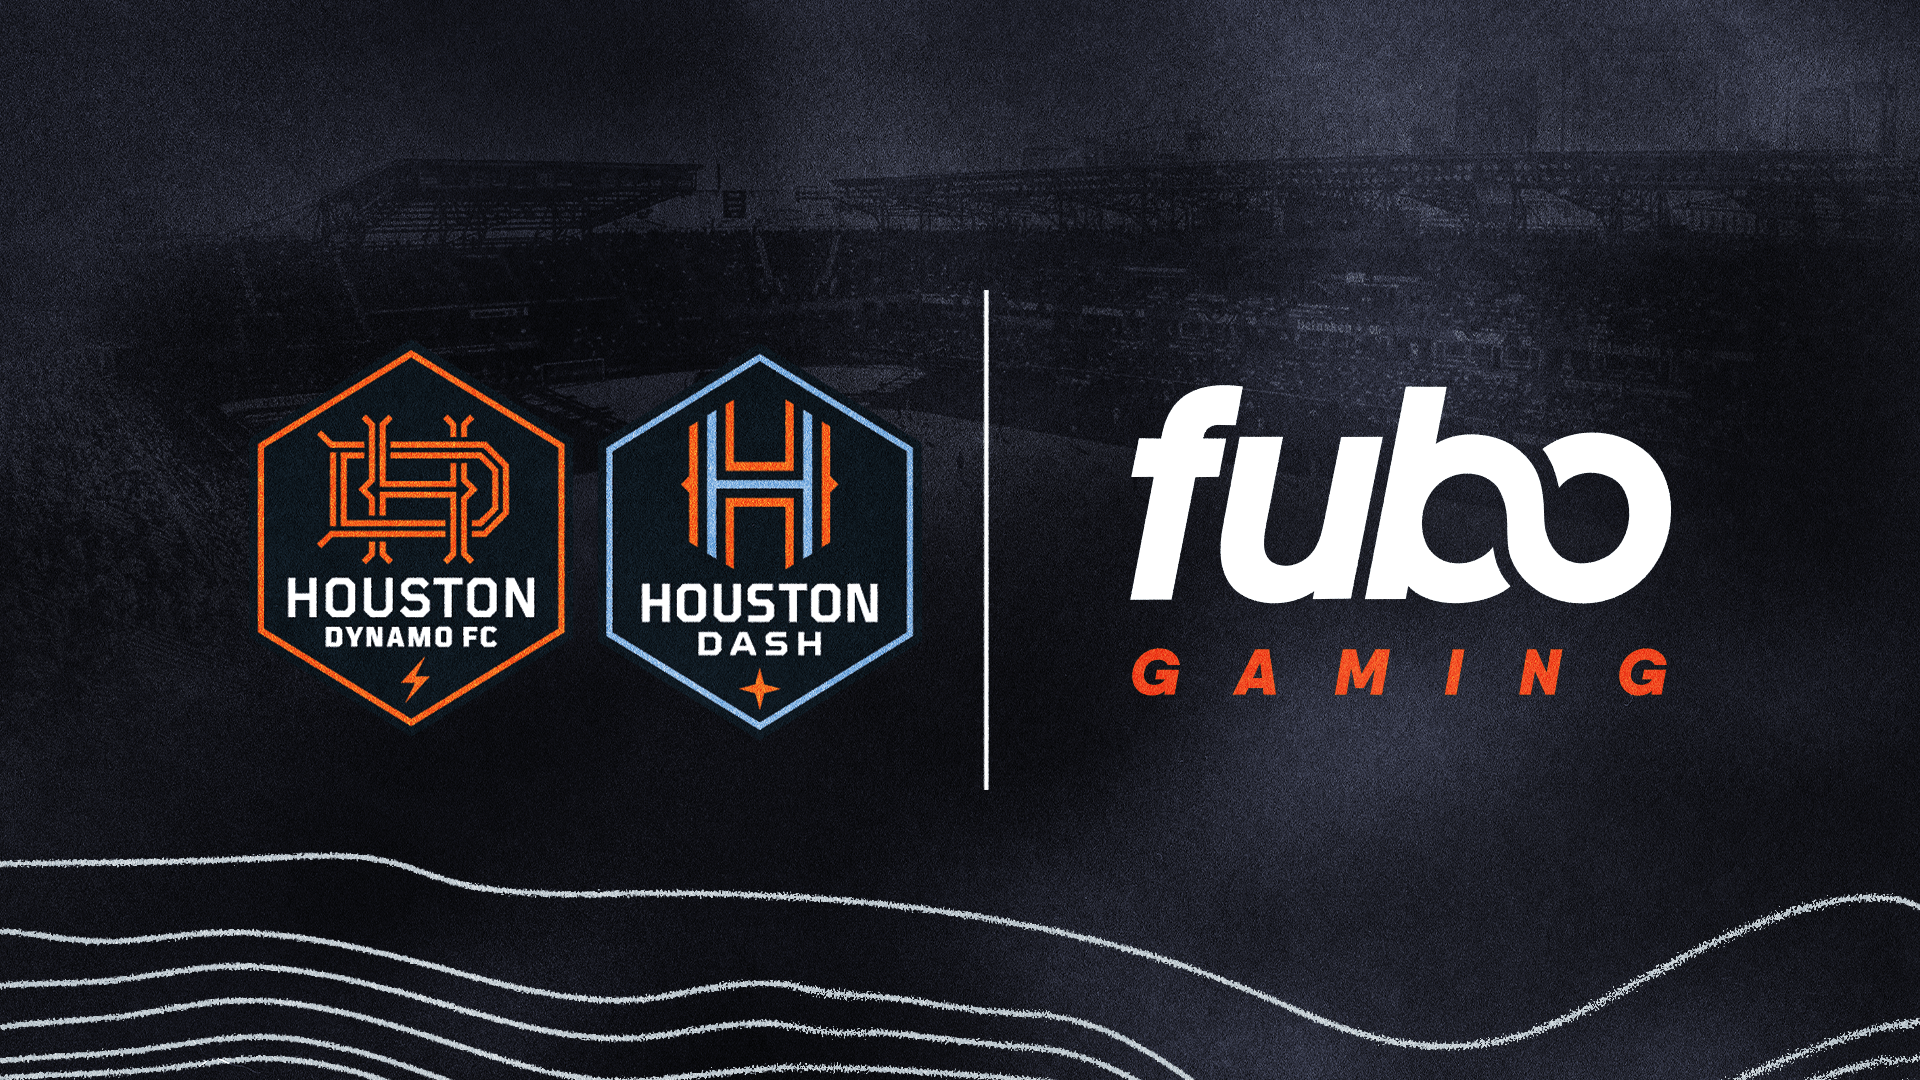 Houston Dynamo Football Club teams with Fubo Gaming in groundbreaking partnership Houston Dynamo